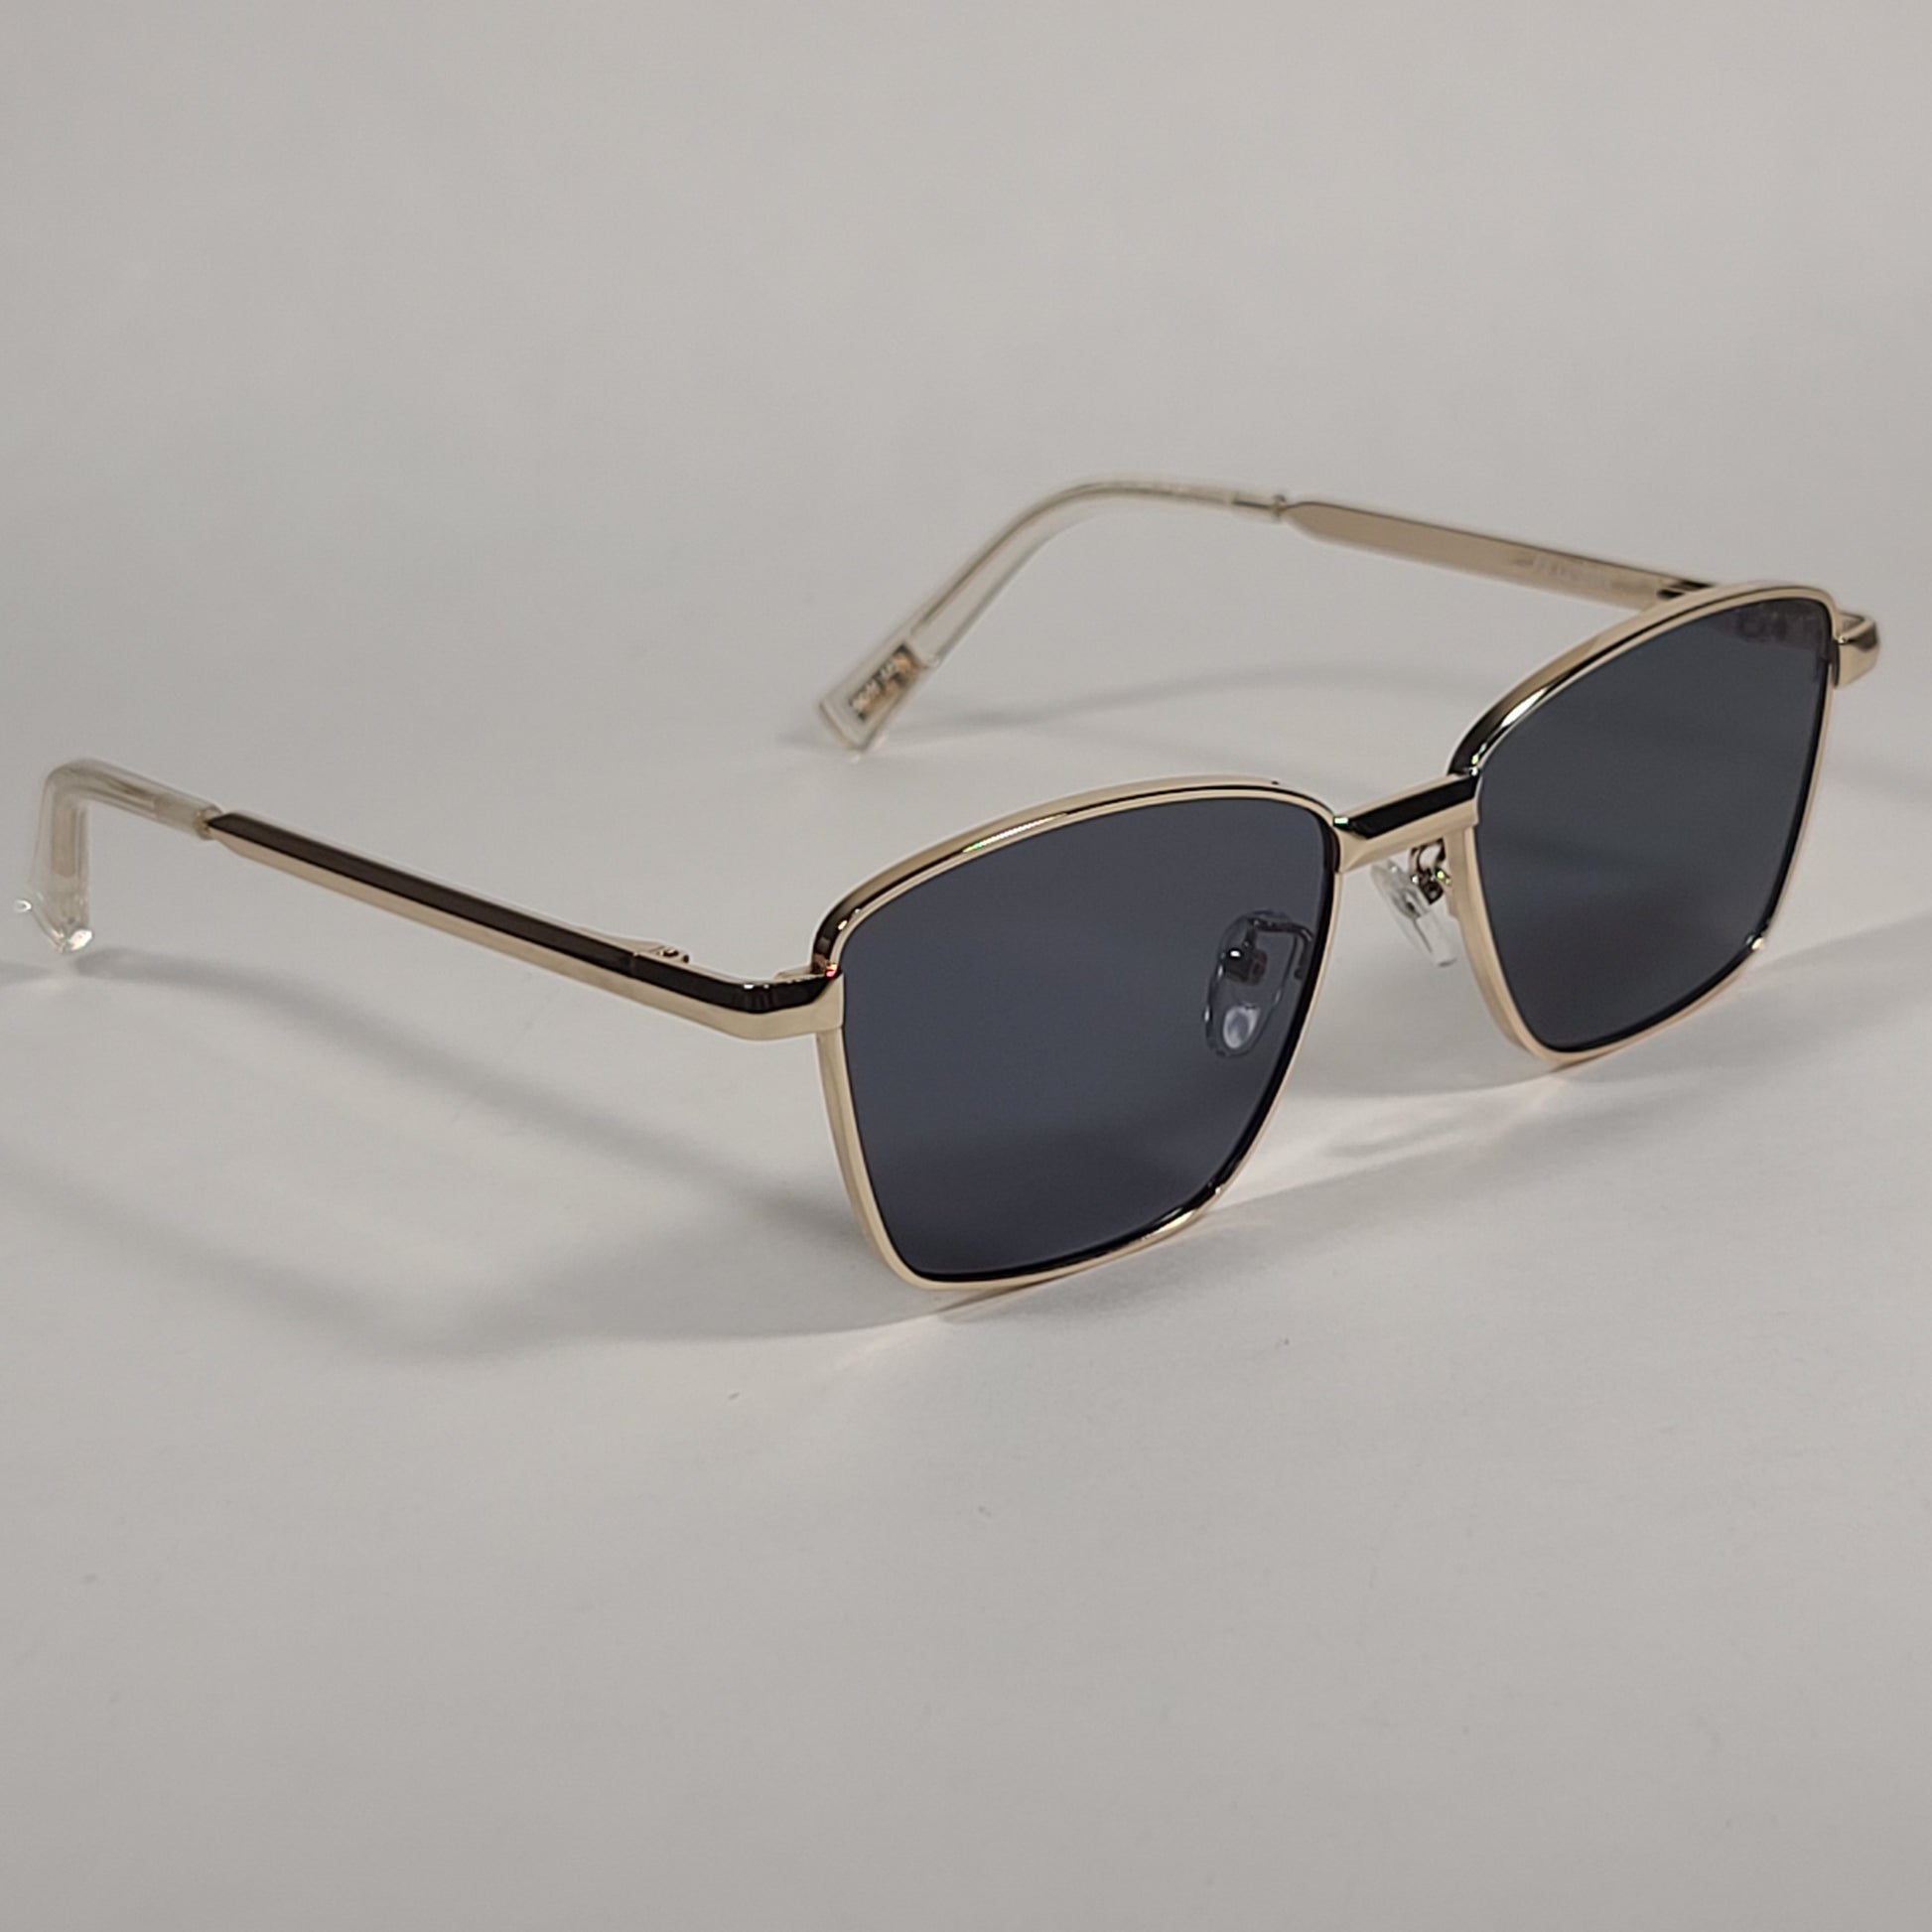 Le Specs Supastar Square Sunglasses Gold Tone Metal Frame Gray Tinted Lens LSP1902055 - Sunglasses